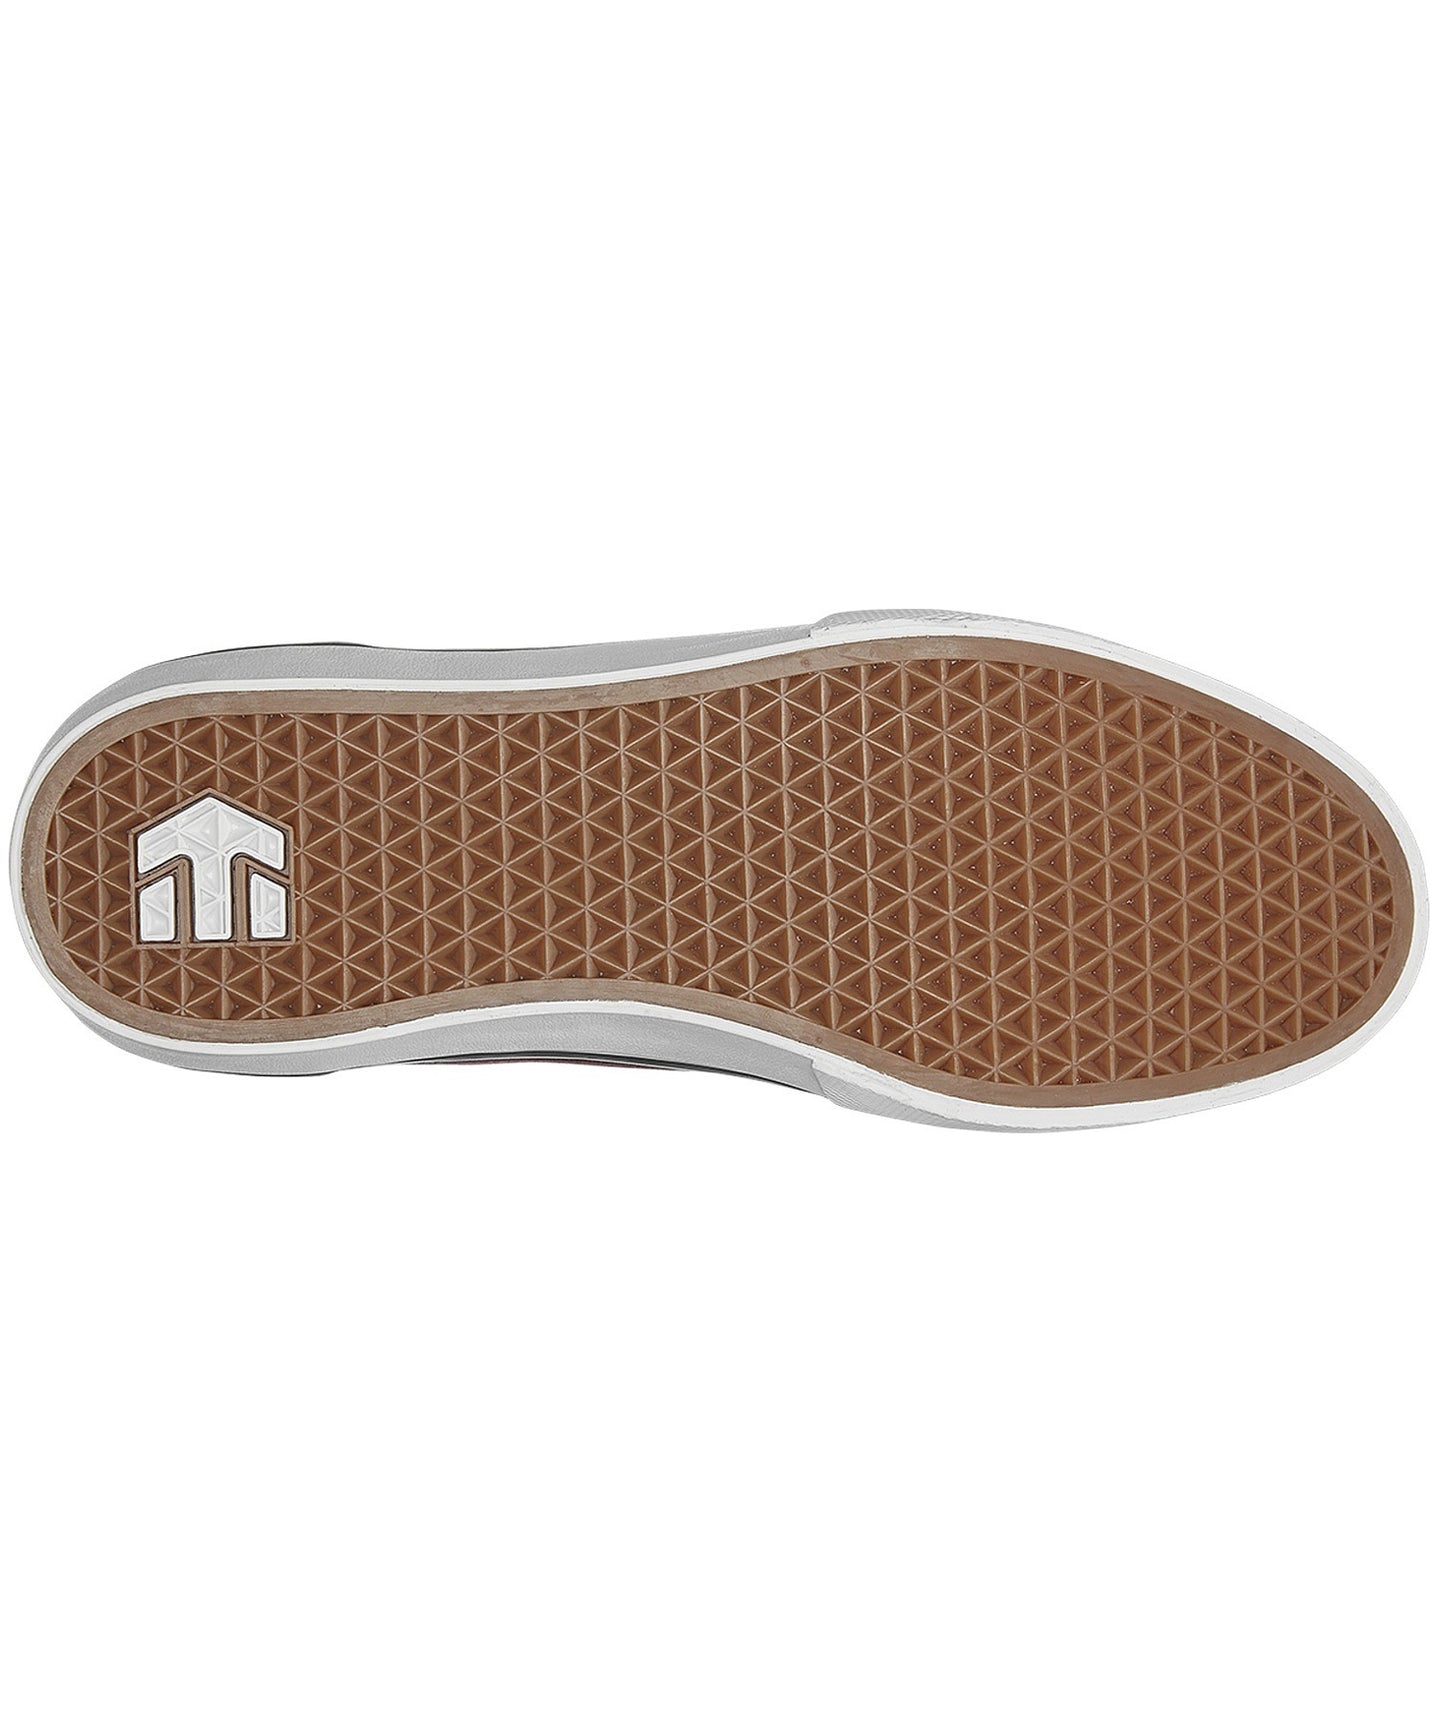 etnies zapatillas-calli-vulc-burgundy-vulcanizada-color granate-plantilla eva foam lite-durabilidad etnies ideal para skateboard